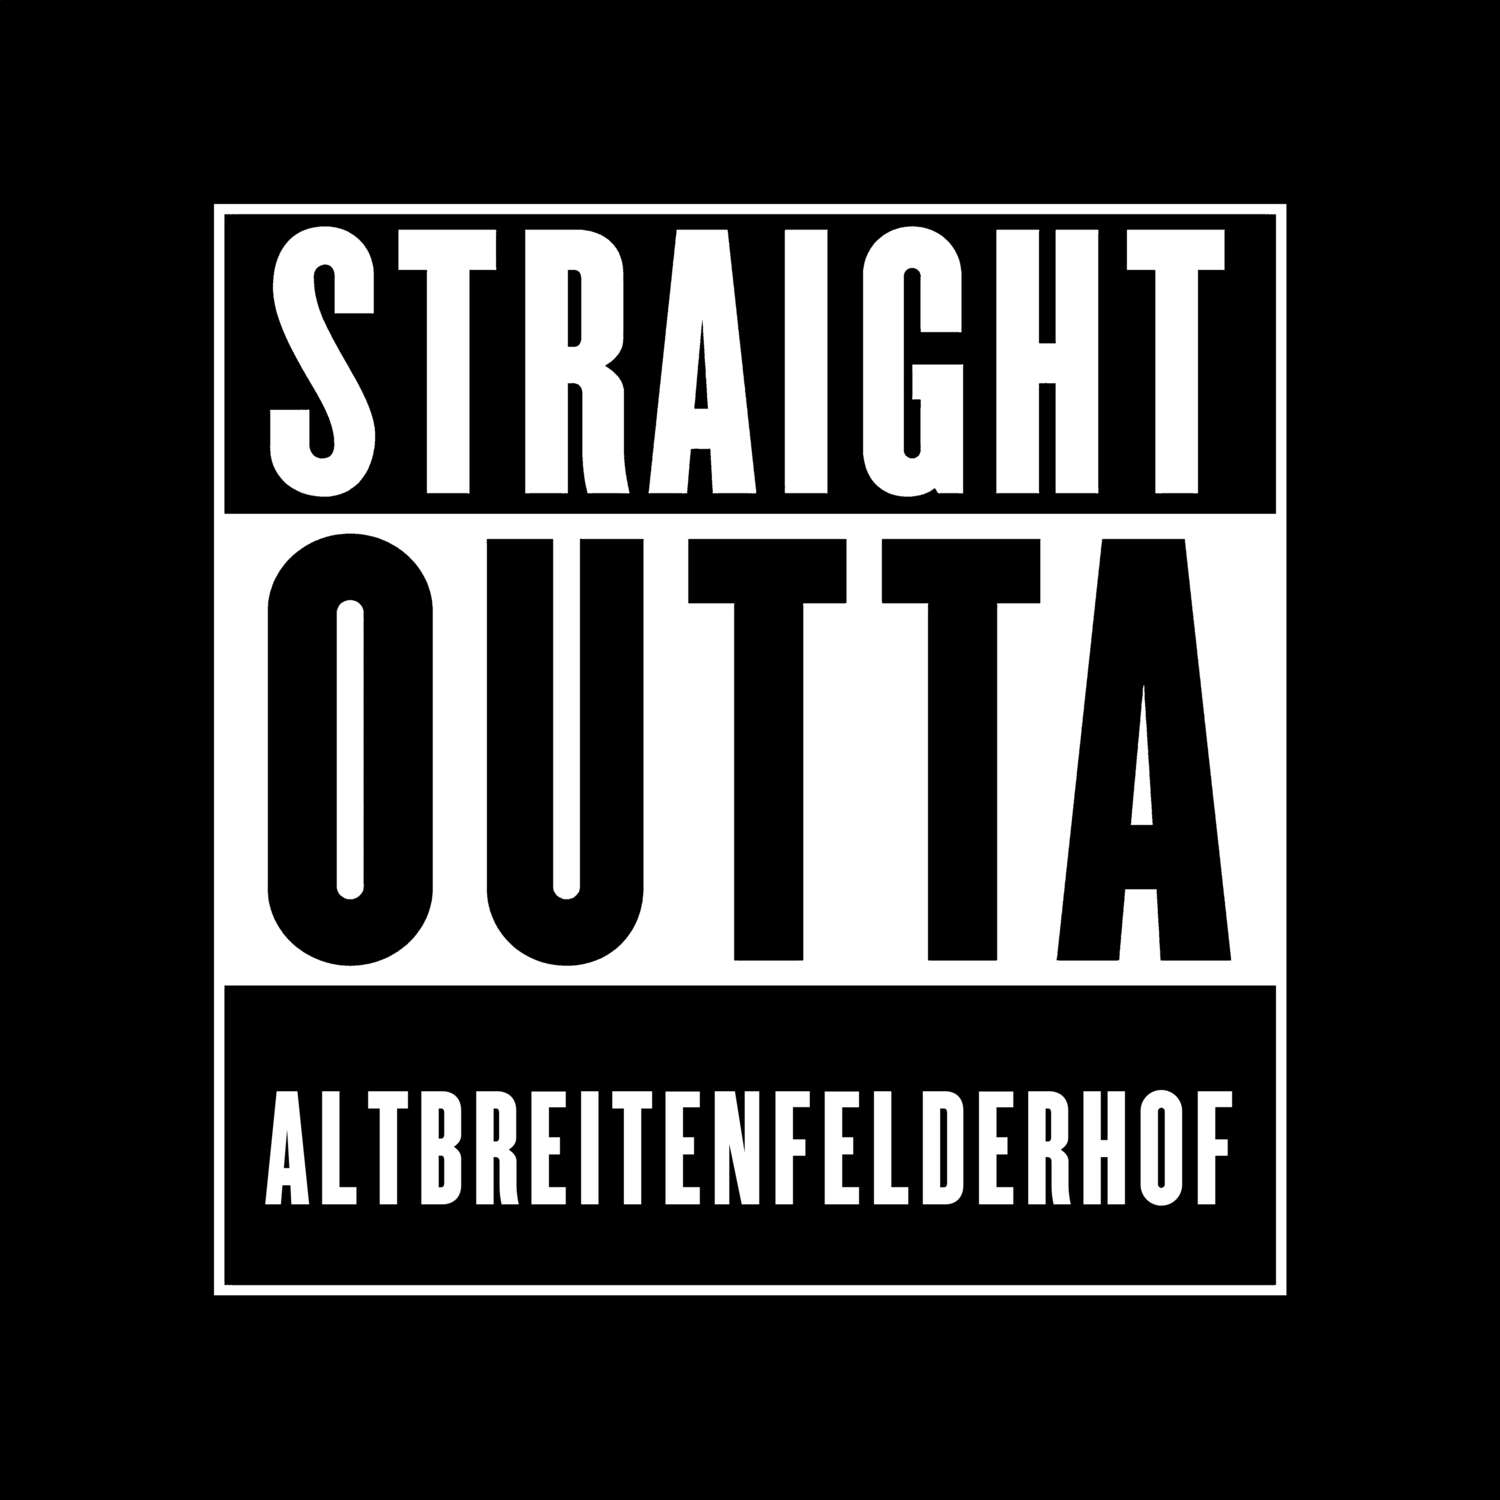 Altbreitenfelderhof T-Shirt »Straight Outta«